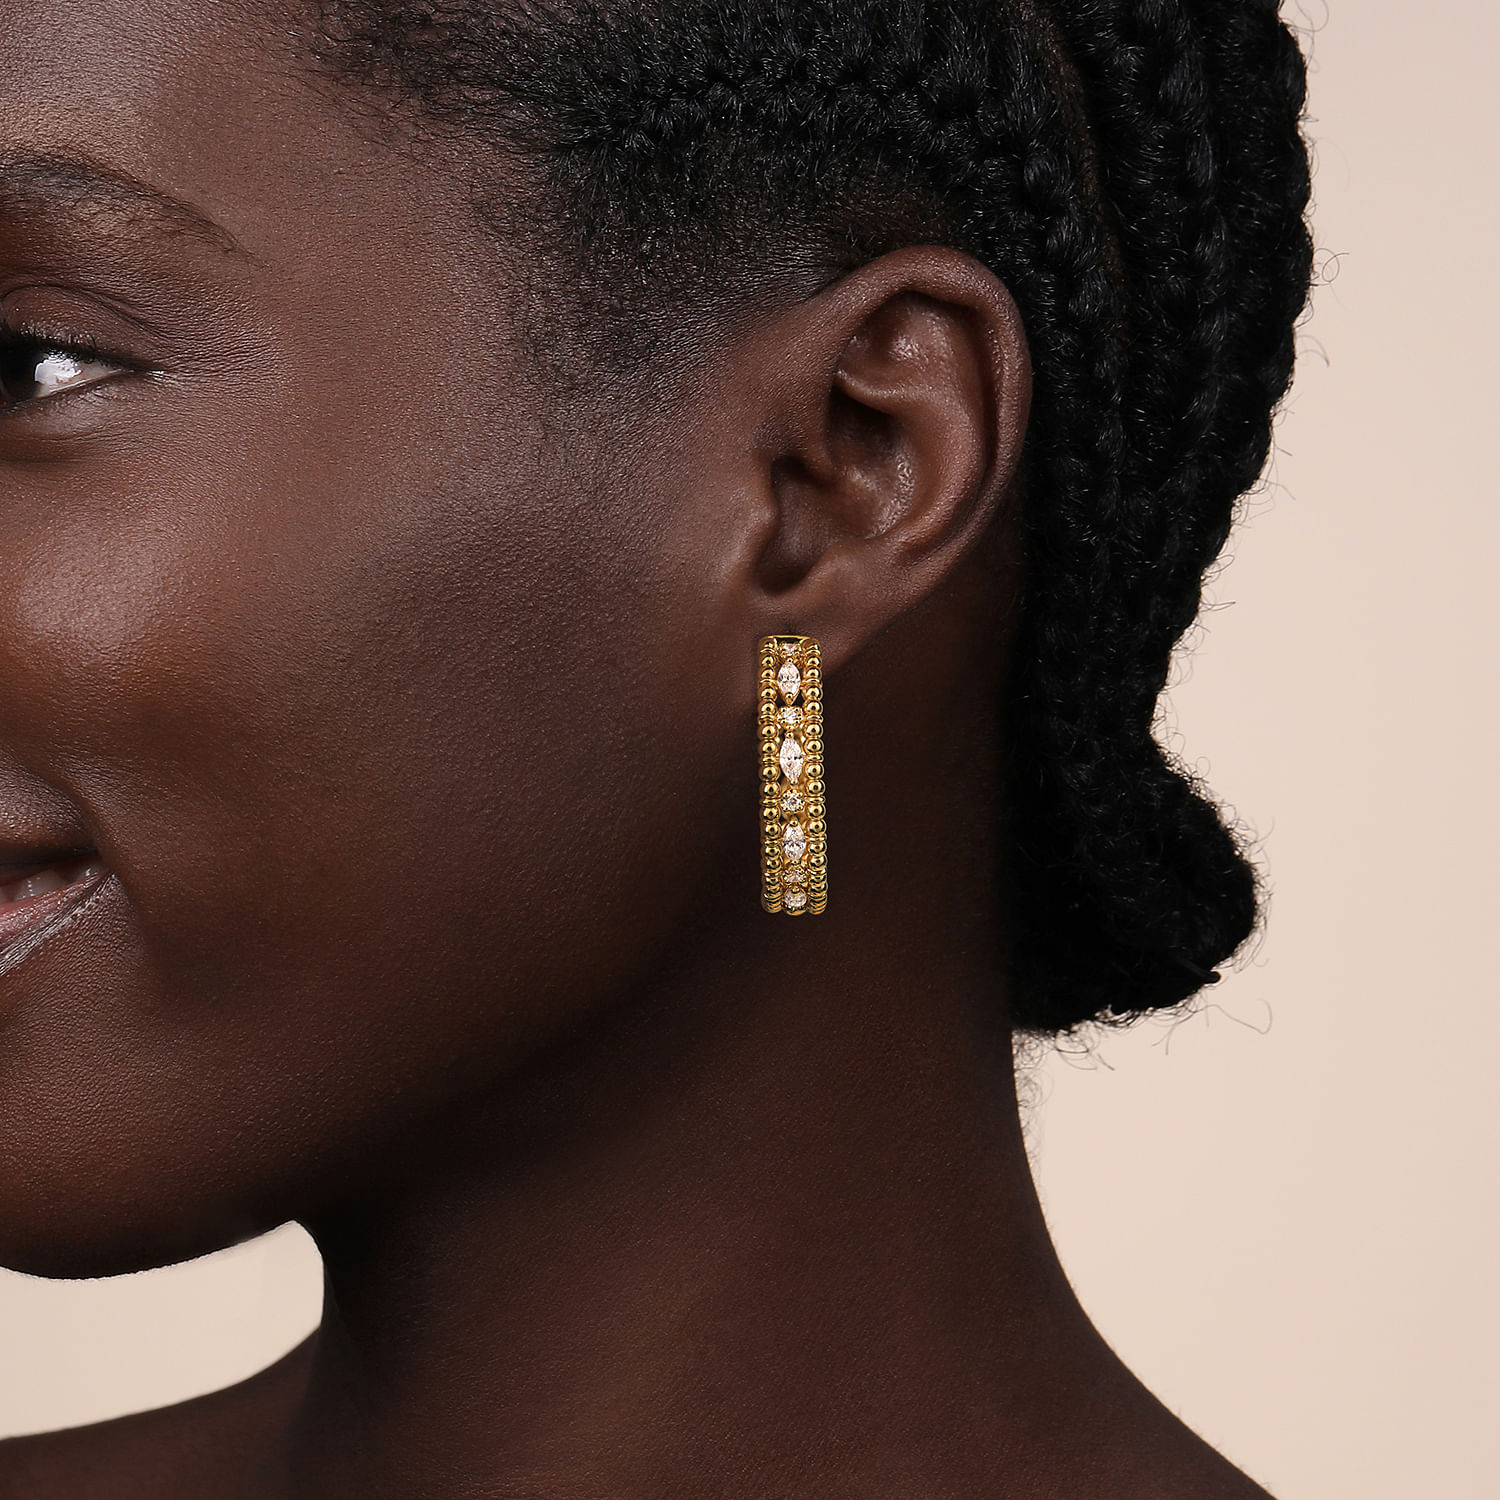 14K Yellow Gold Bujukan Diamond Classic Hoop Earrings in size 30mm